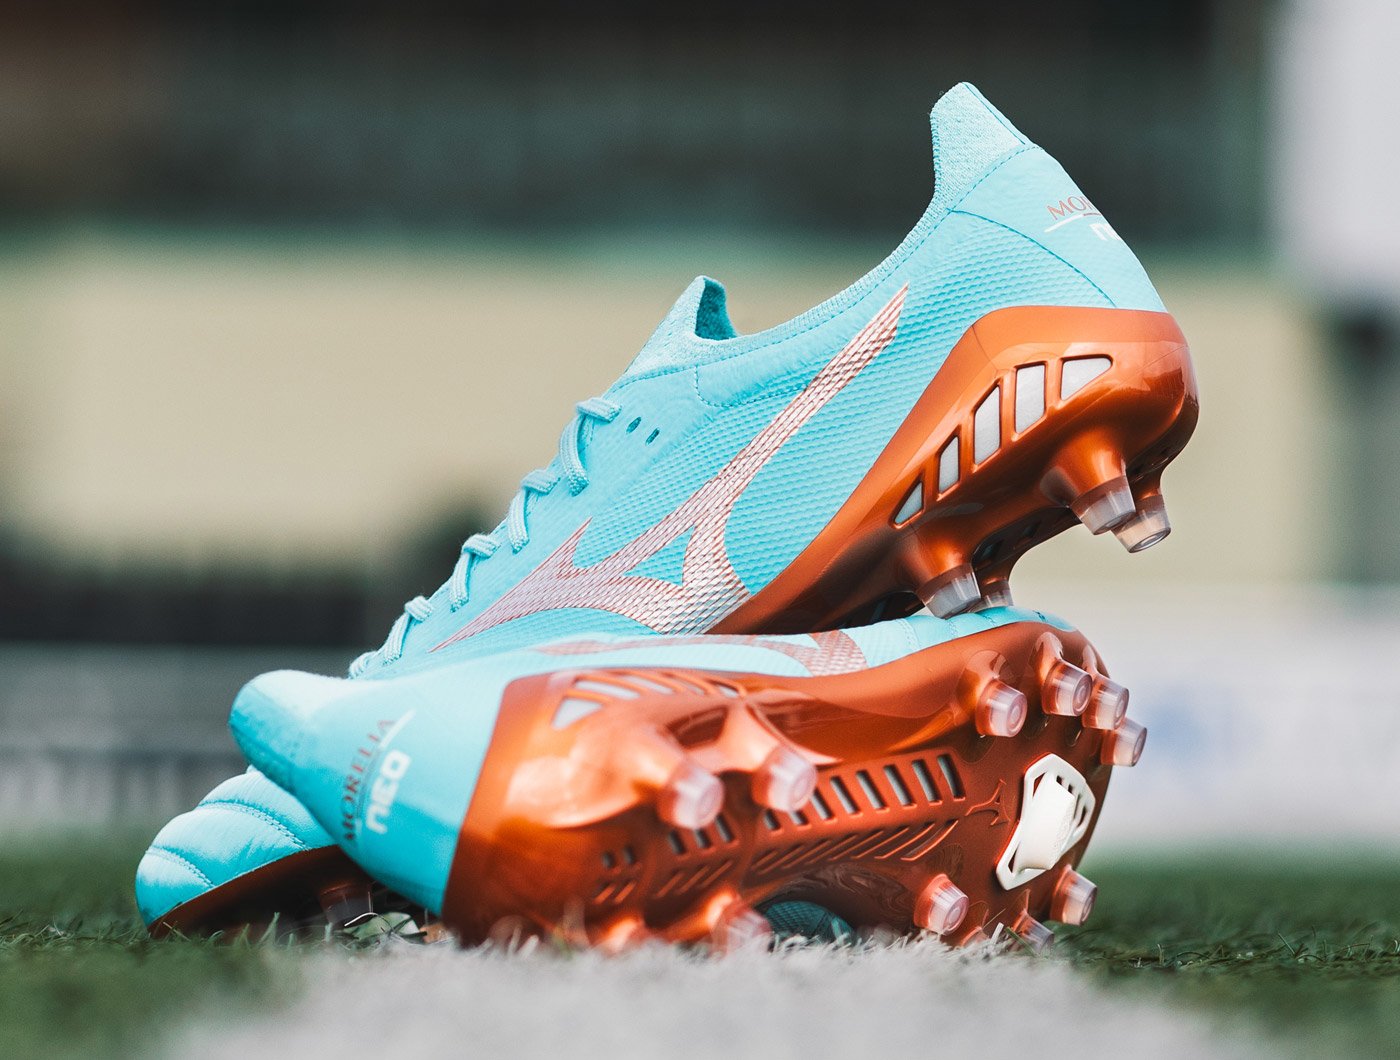 Football Boots | Nike, adidas, Puma 